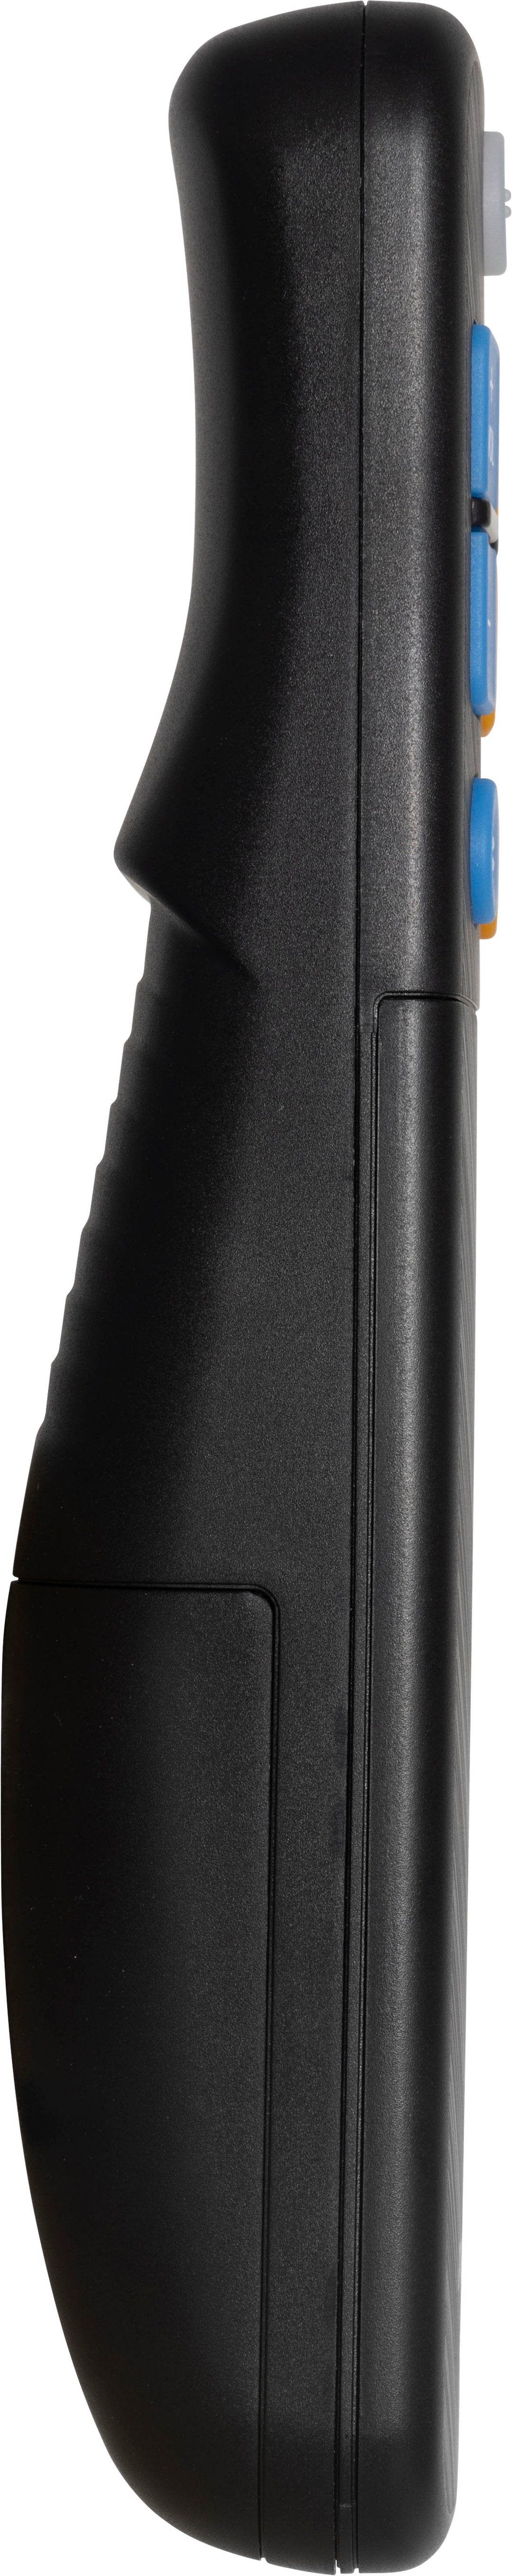 Philips - Elite EZ Slide 2-Device Universal Remote, Black_5